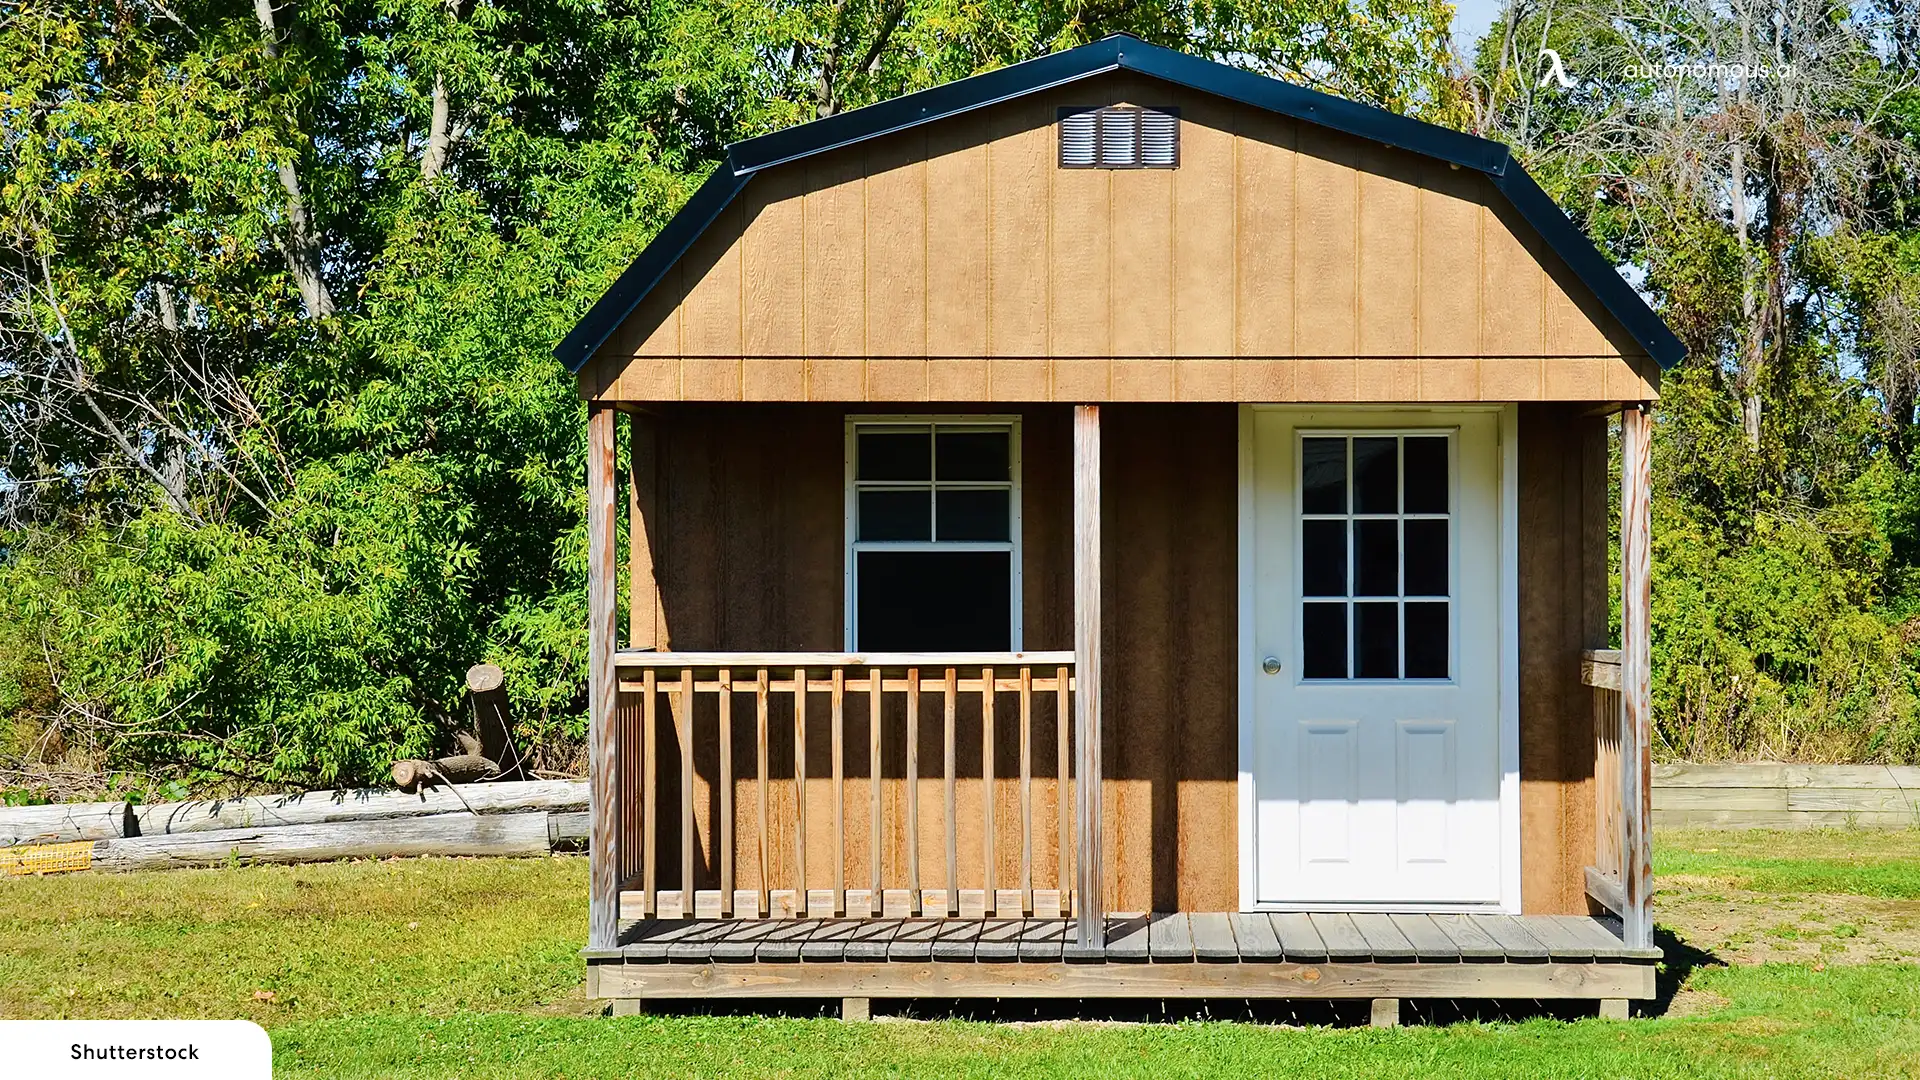 Cottage Style - prefab shed kits